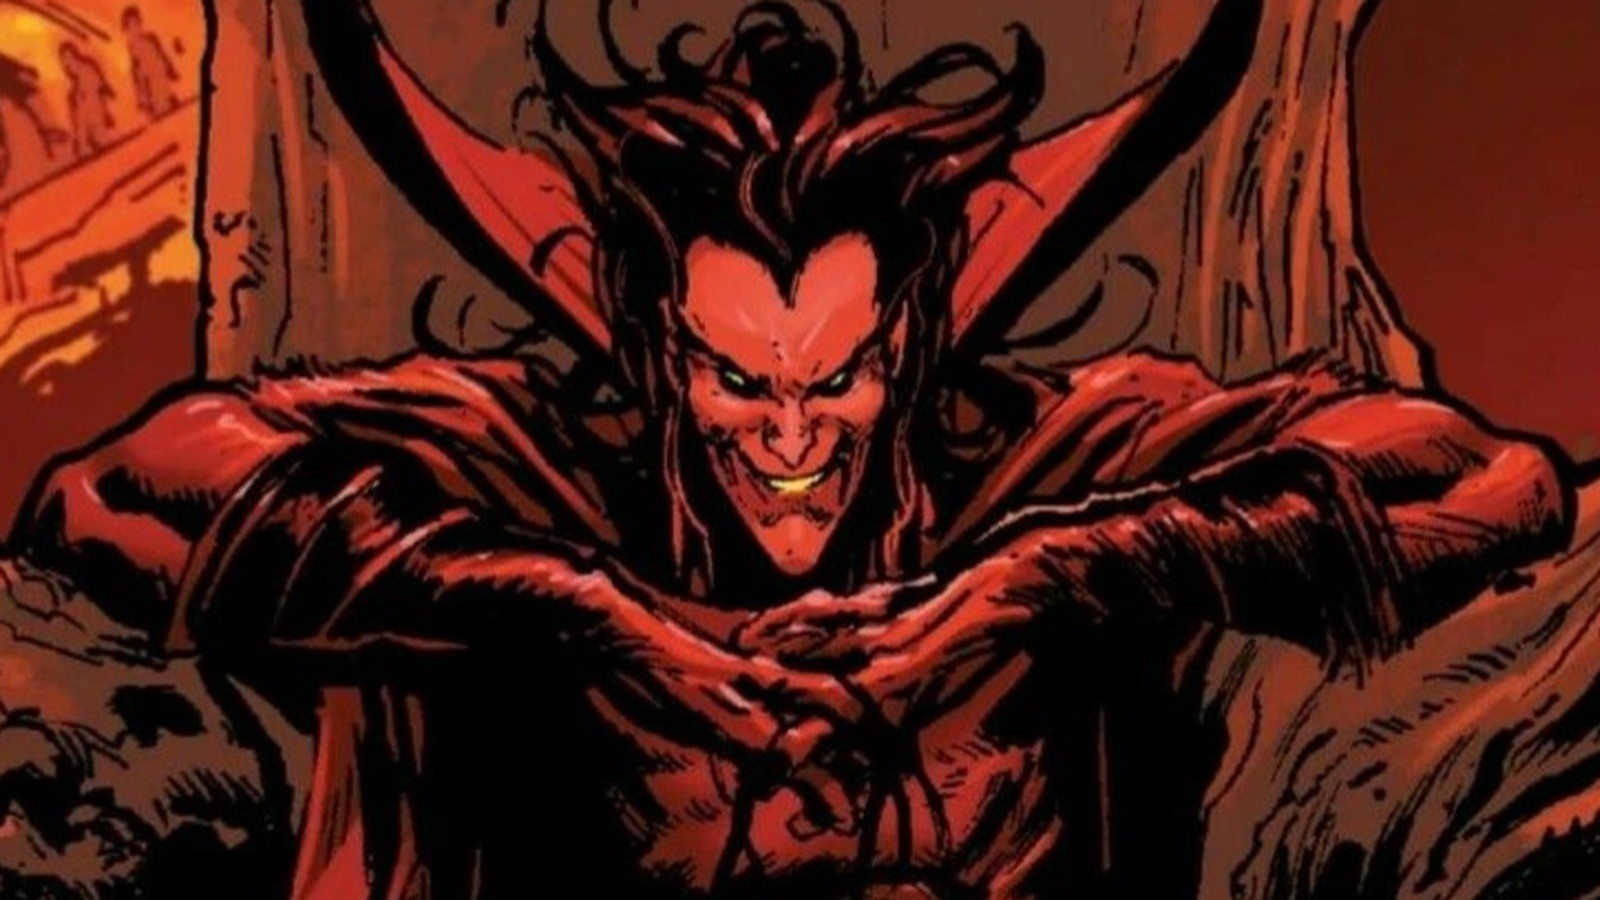 Mephisto from Marvel Comics